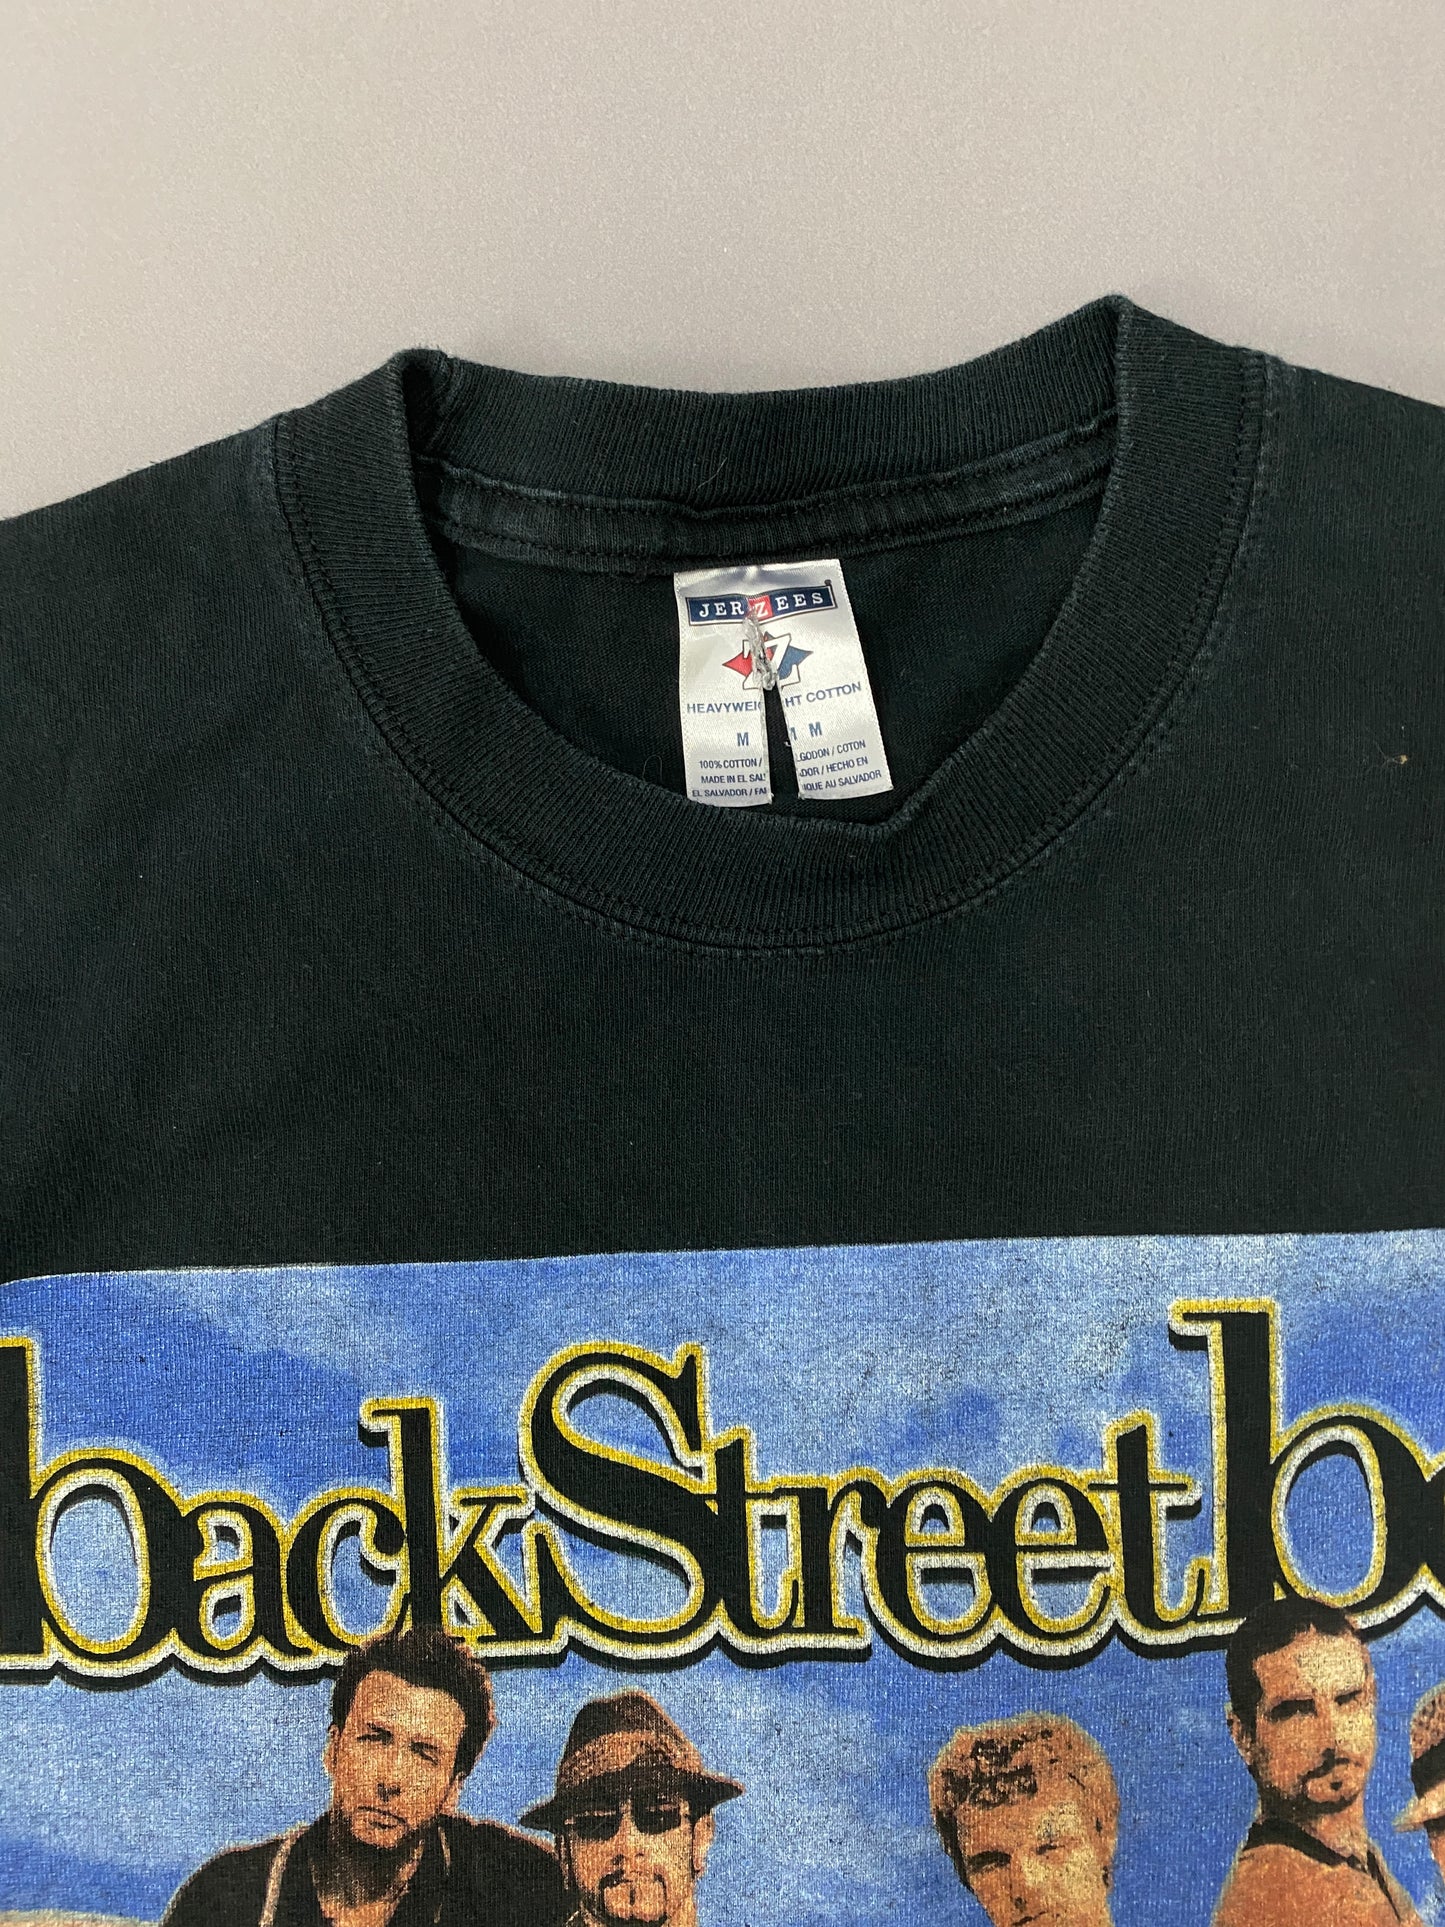 Backstreet Boys 2005 Tour T-Shirt